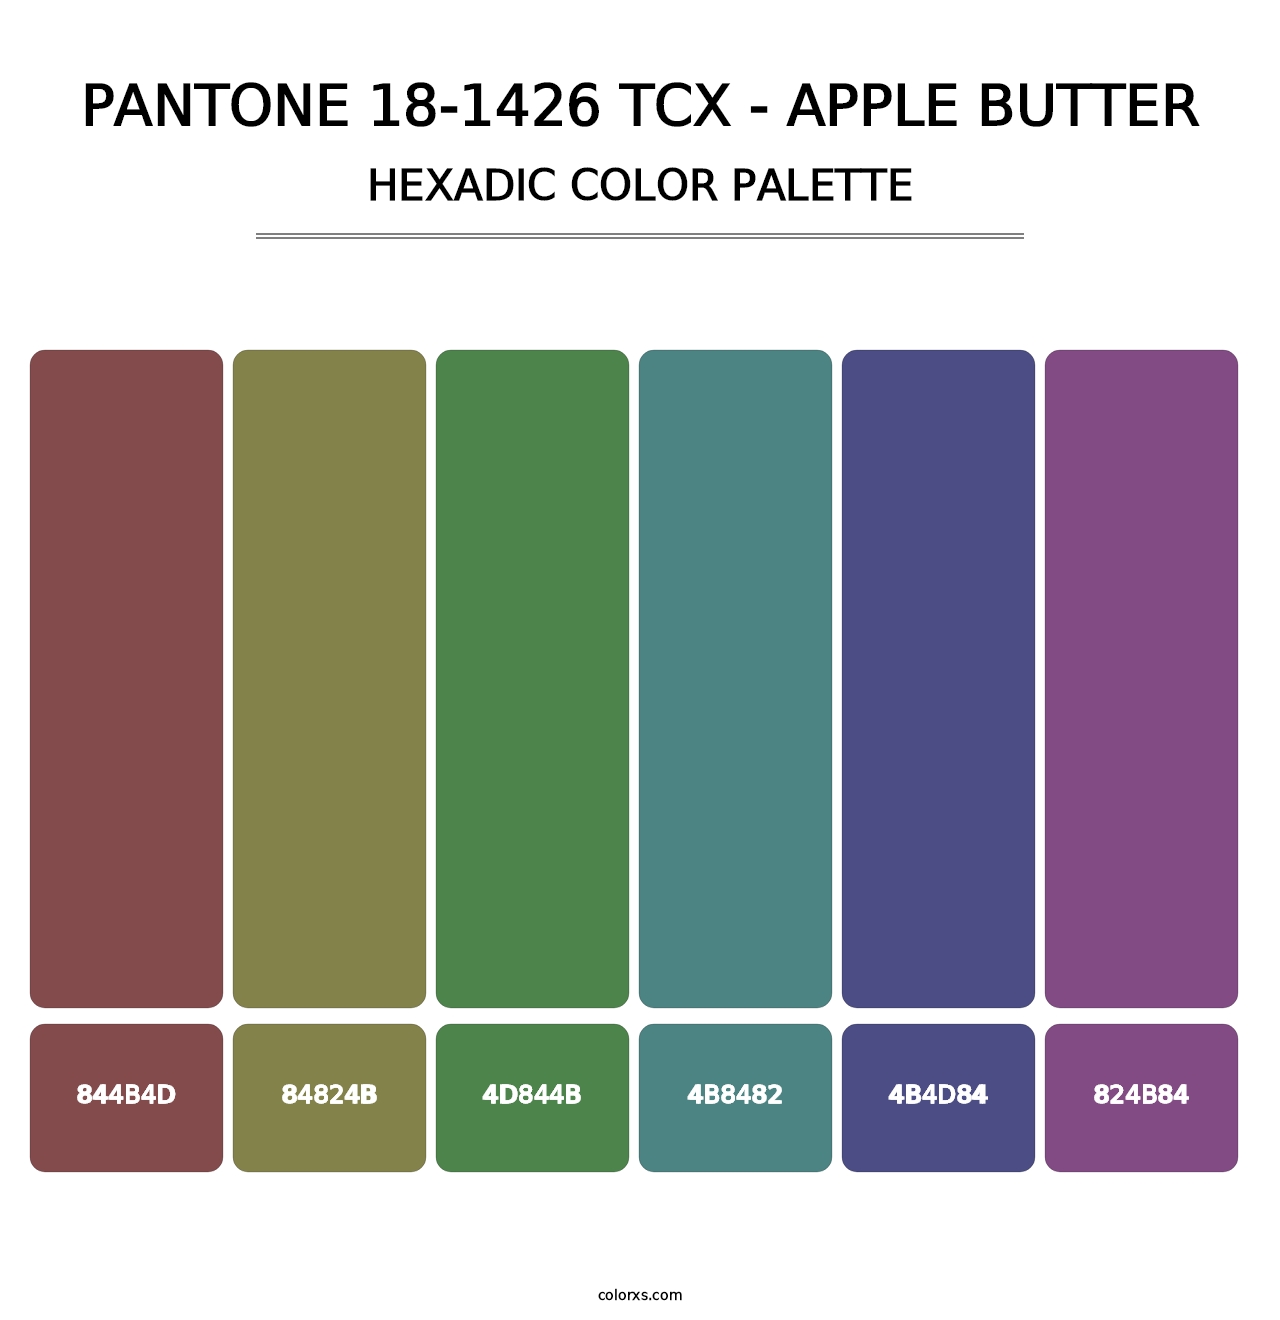 PANTONE 18-1426 TCX - Apple Butter - Hexadic Color Palette